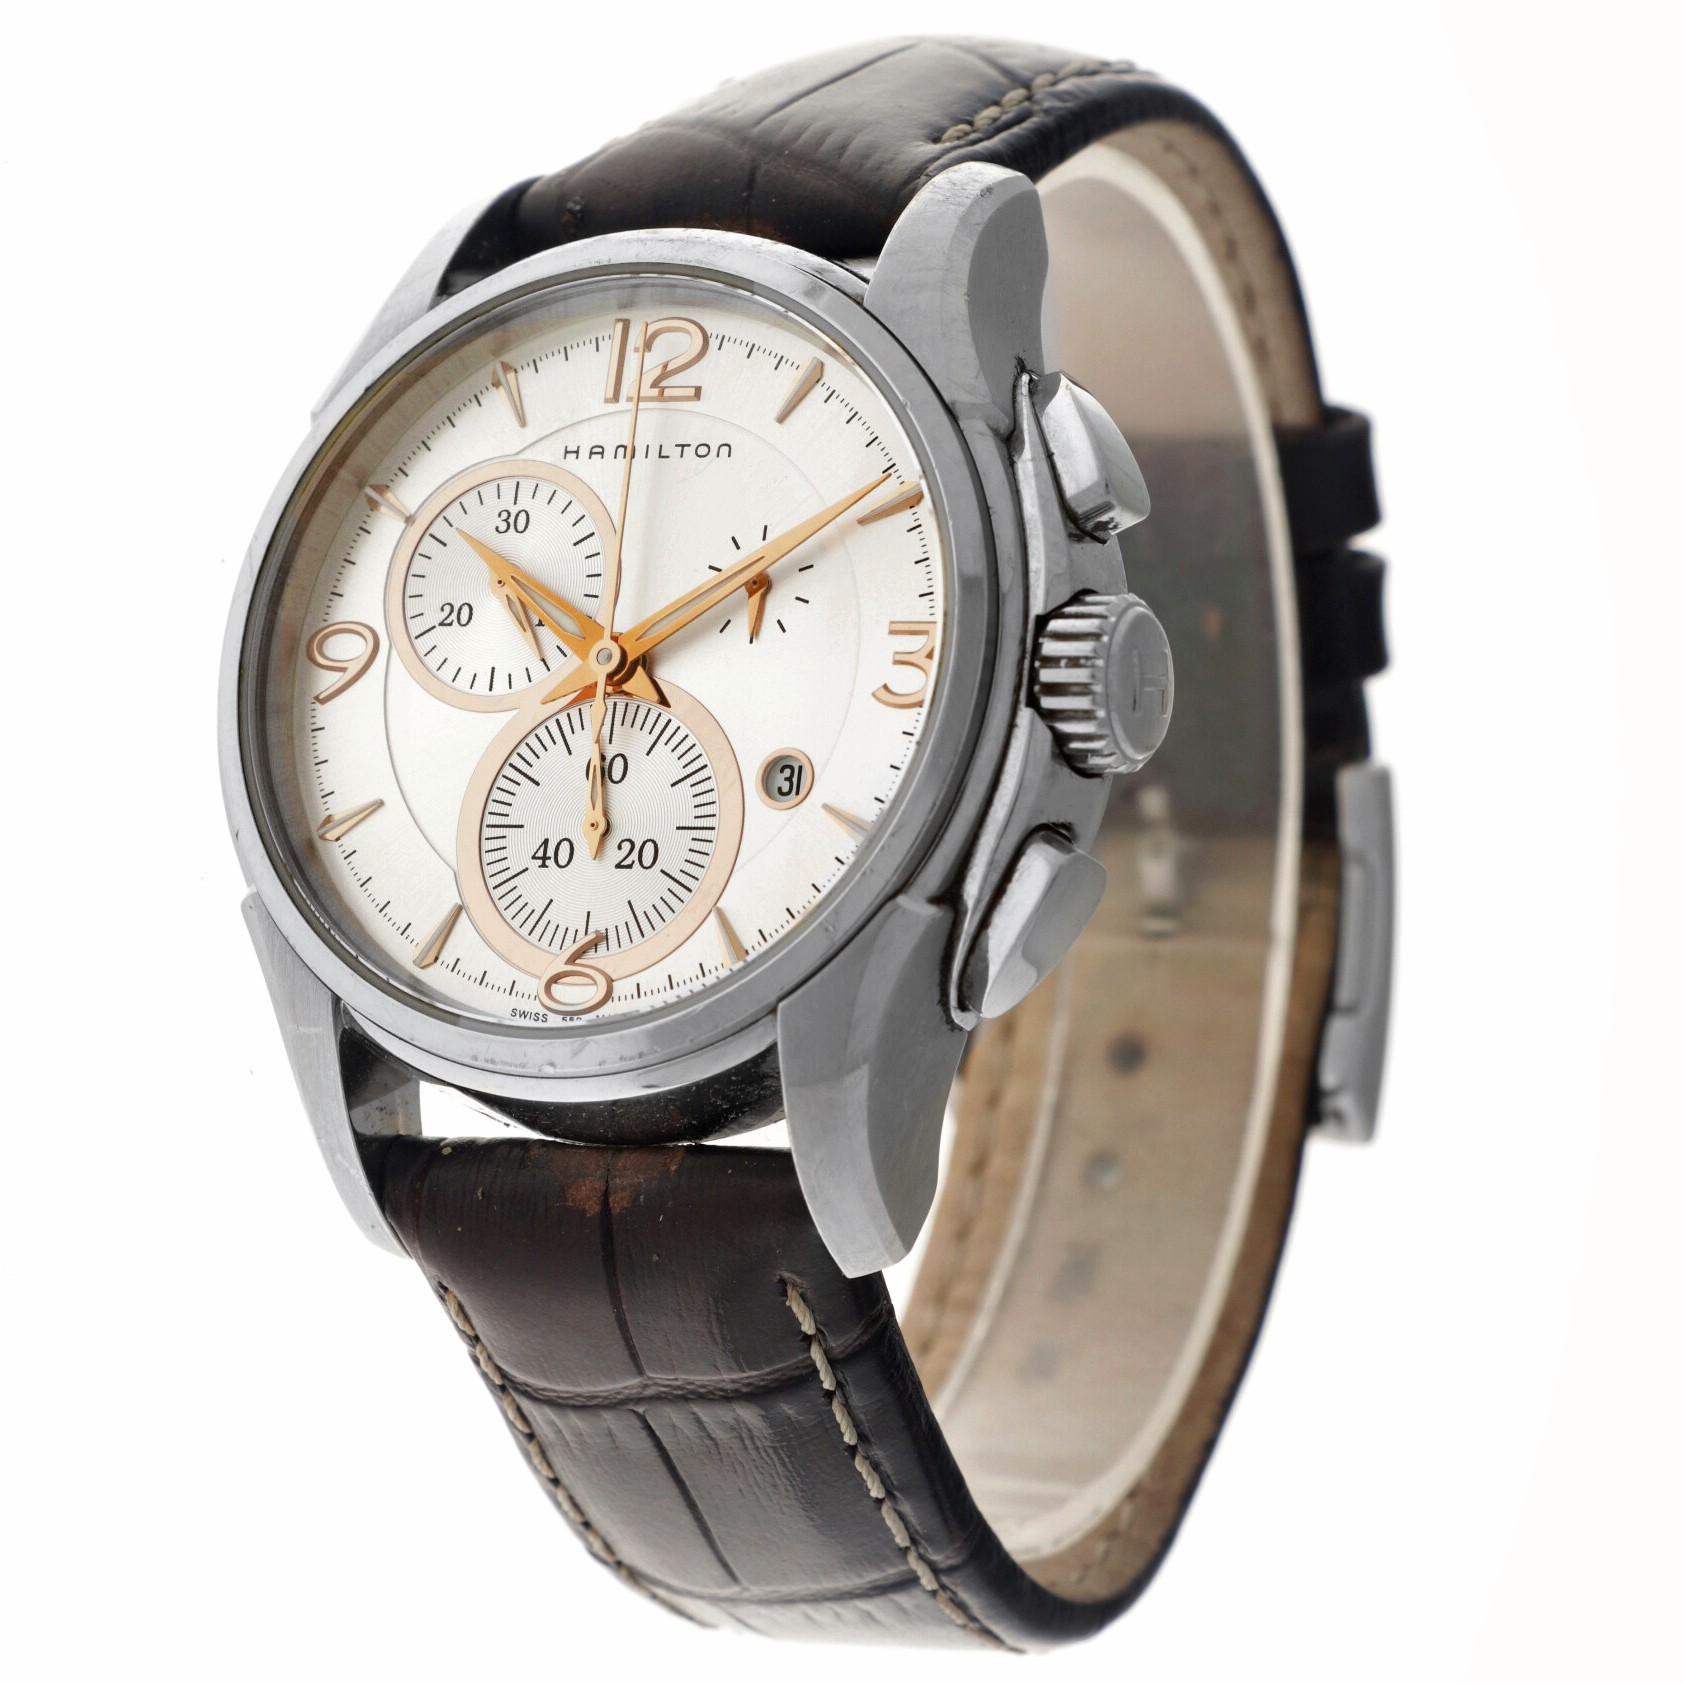 No Reserve - Hamilton Jazzmaster H326120 - Men's watch. - Image 2 of 5